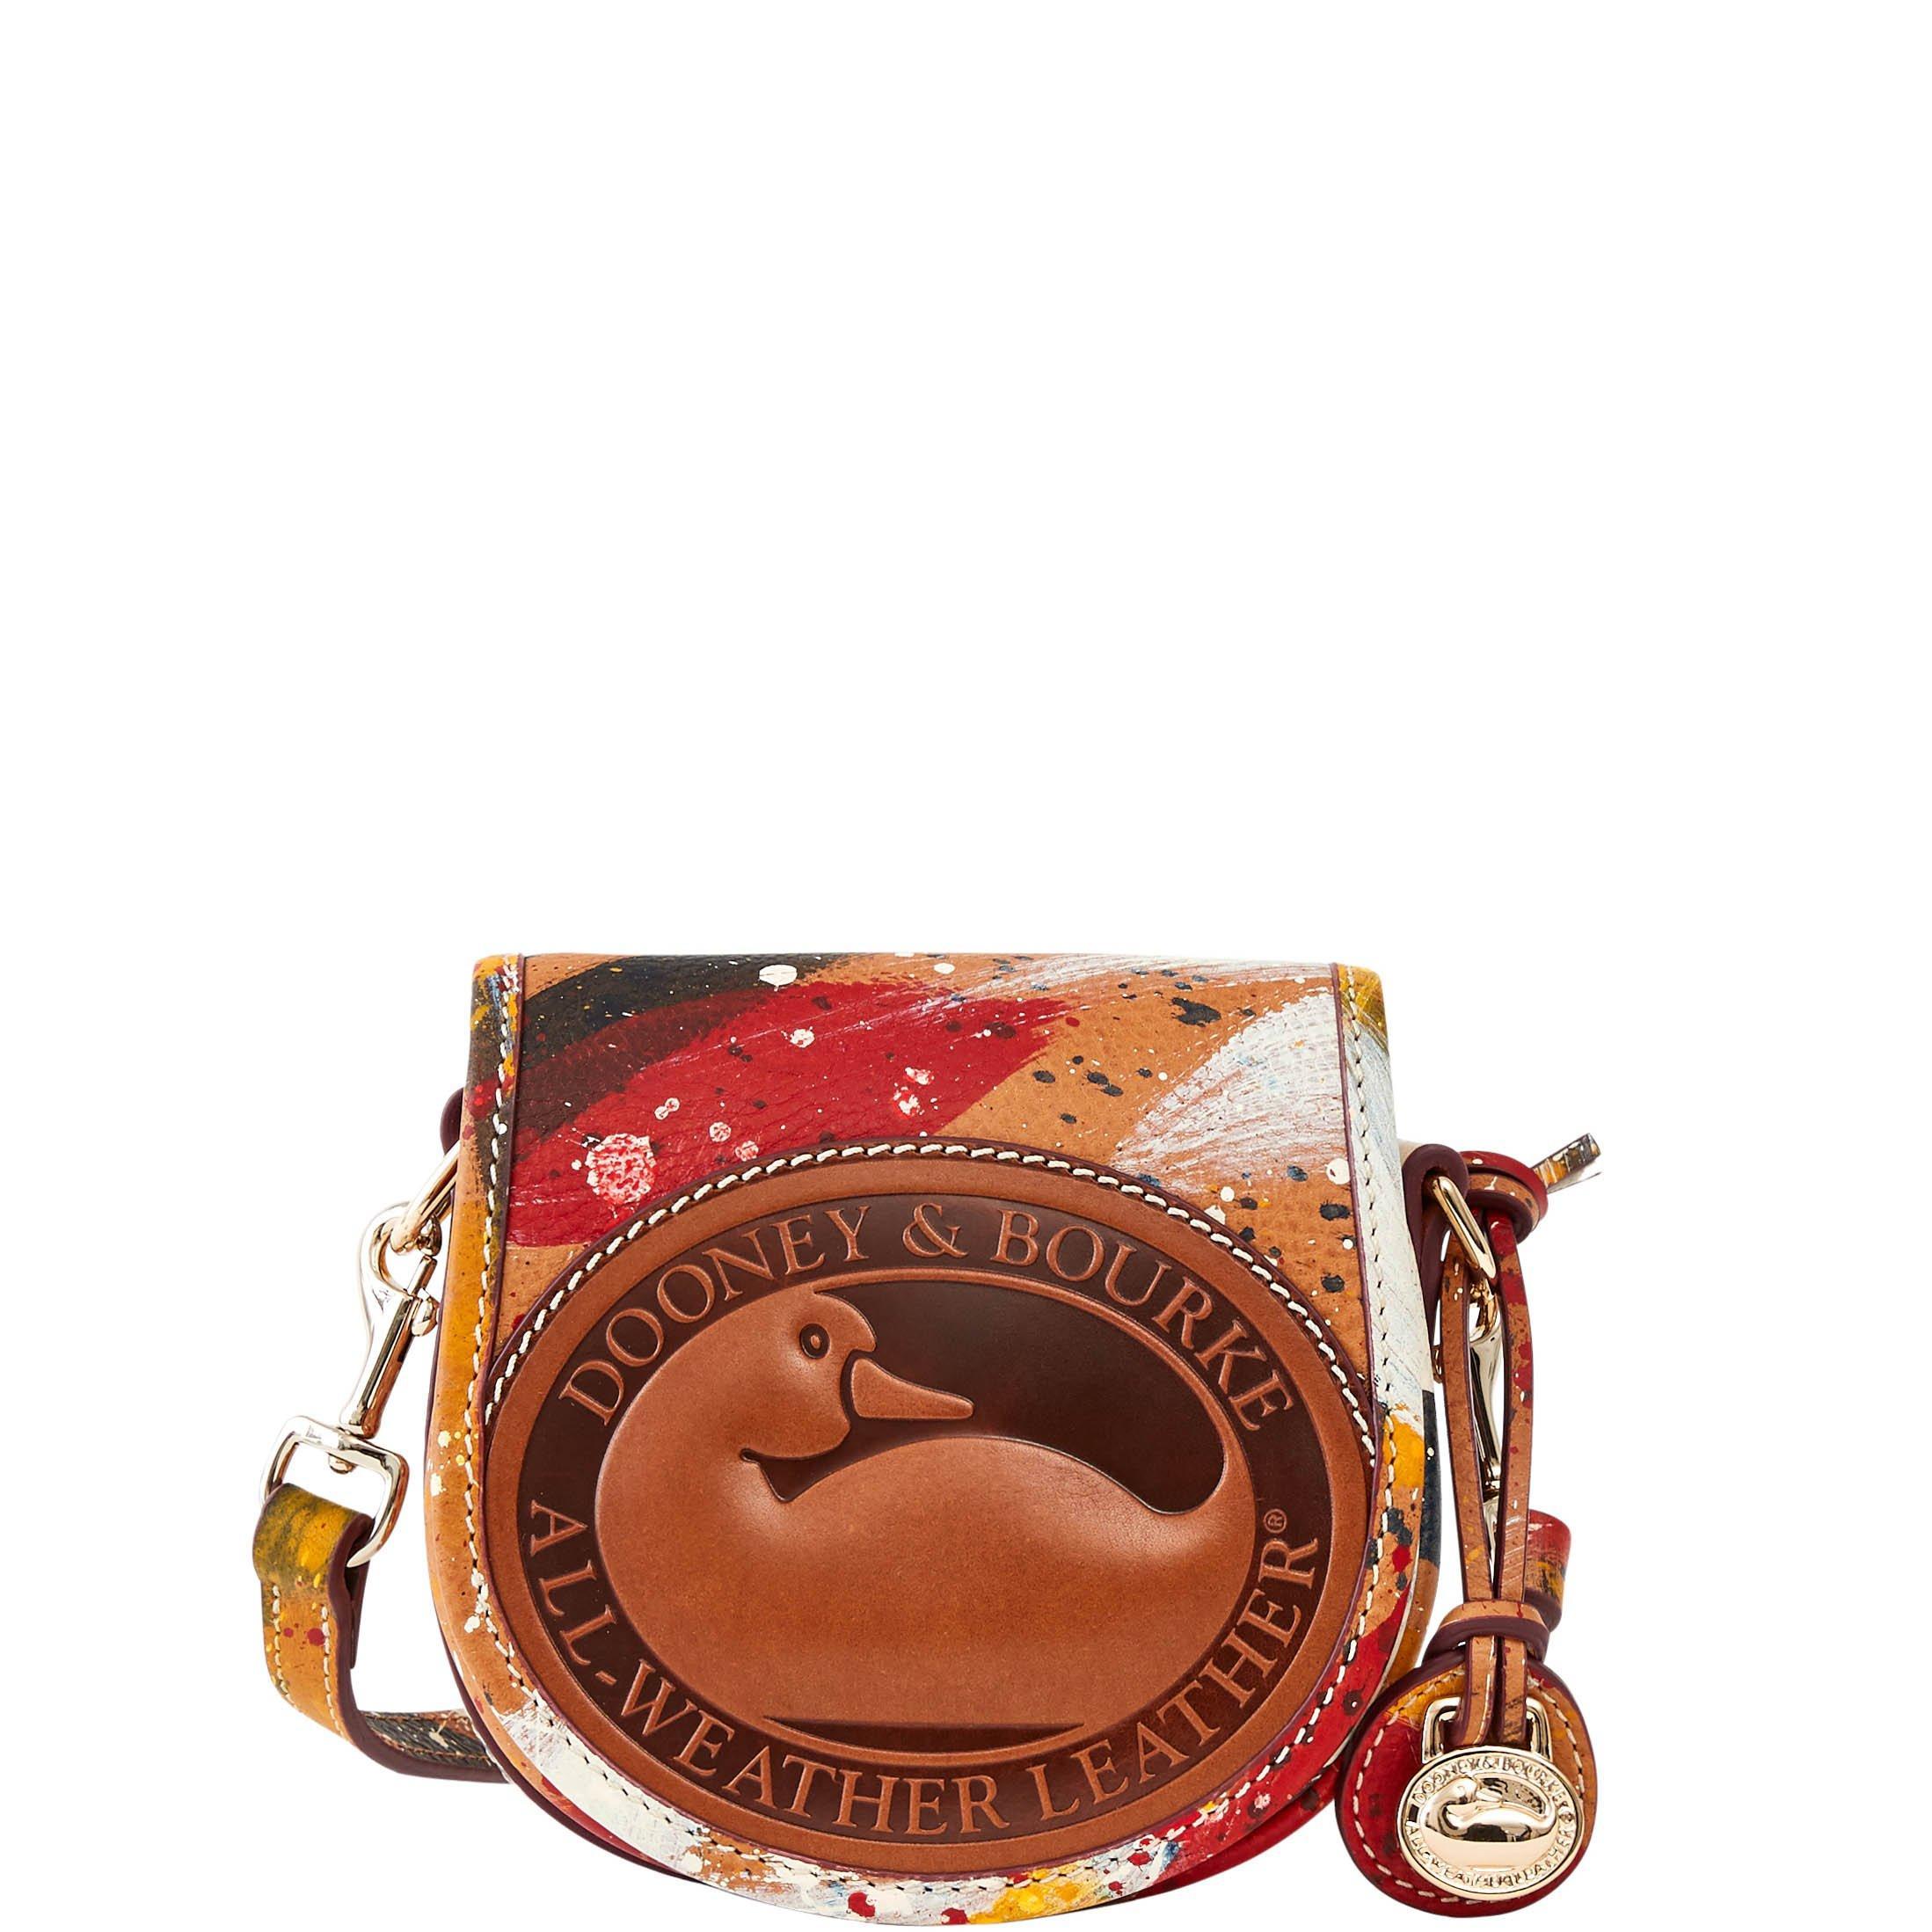 Dooney & Bourke Leather Florentine Dipinta Duck Bag in Natural - Lyst